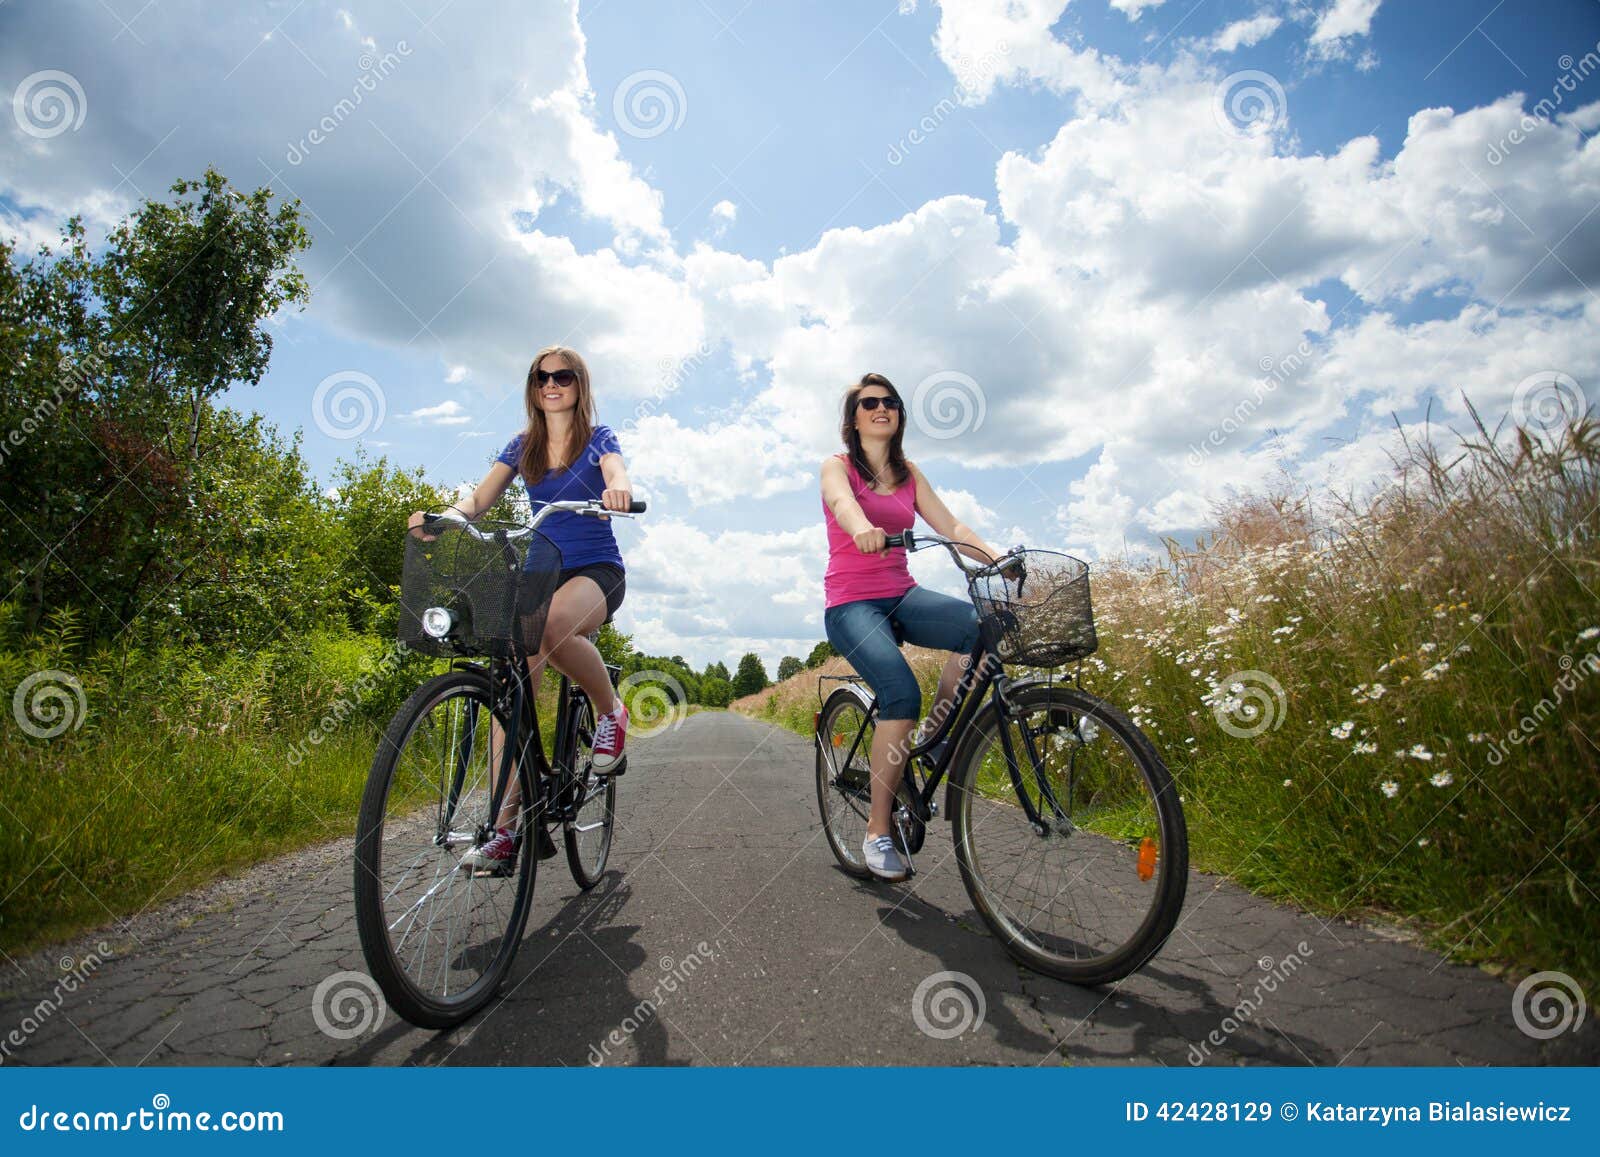 bike travel girl